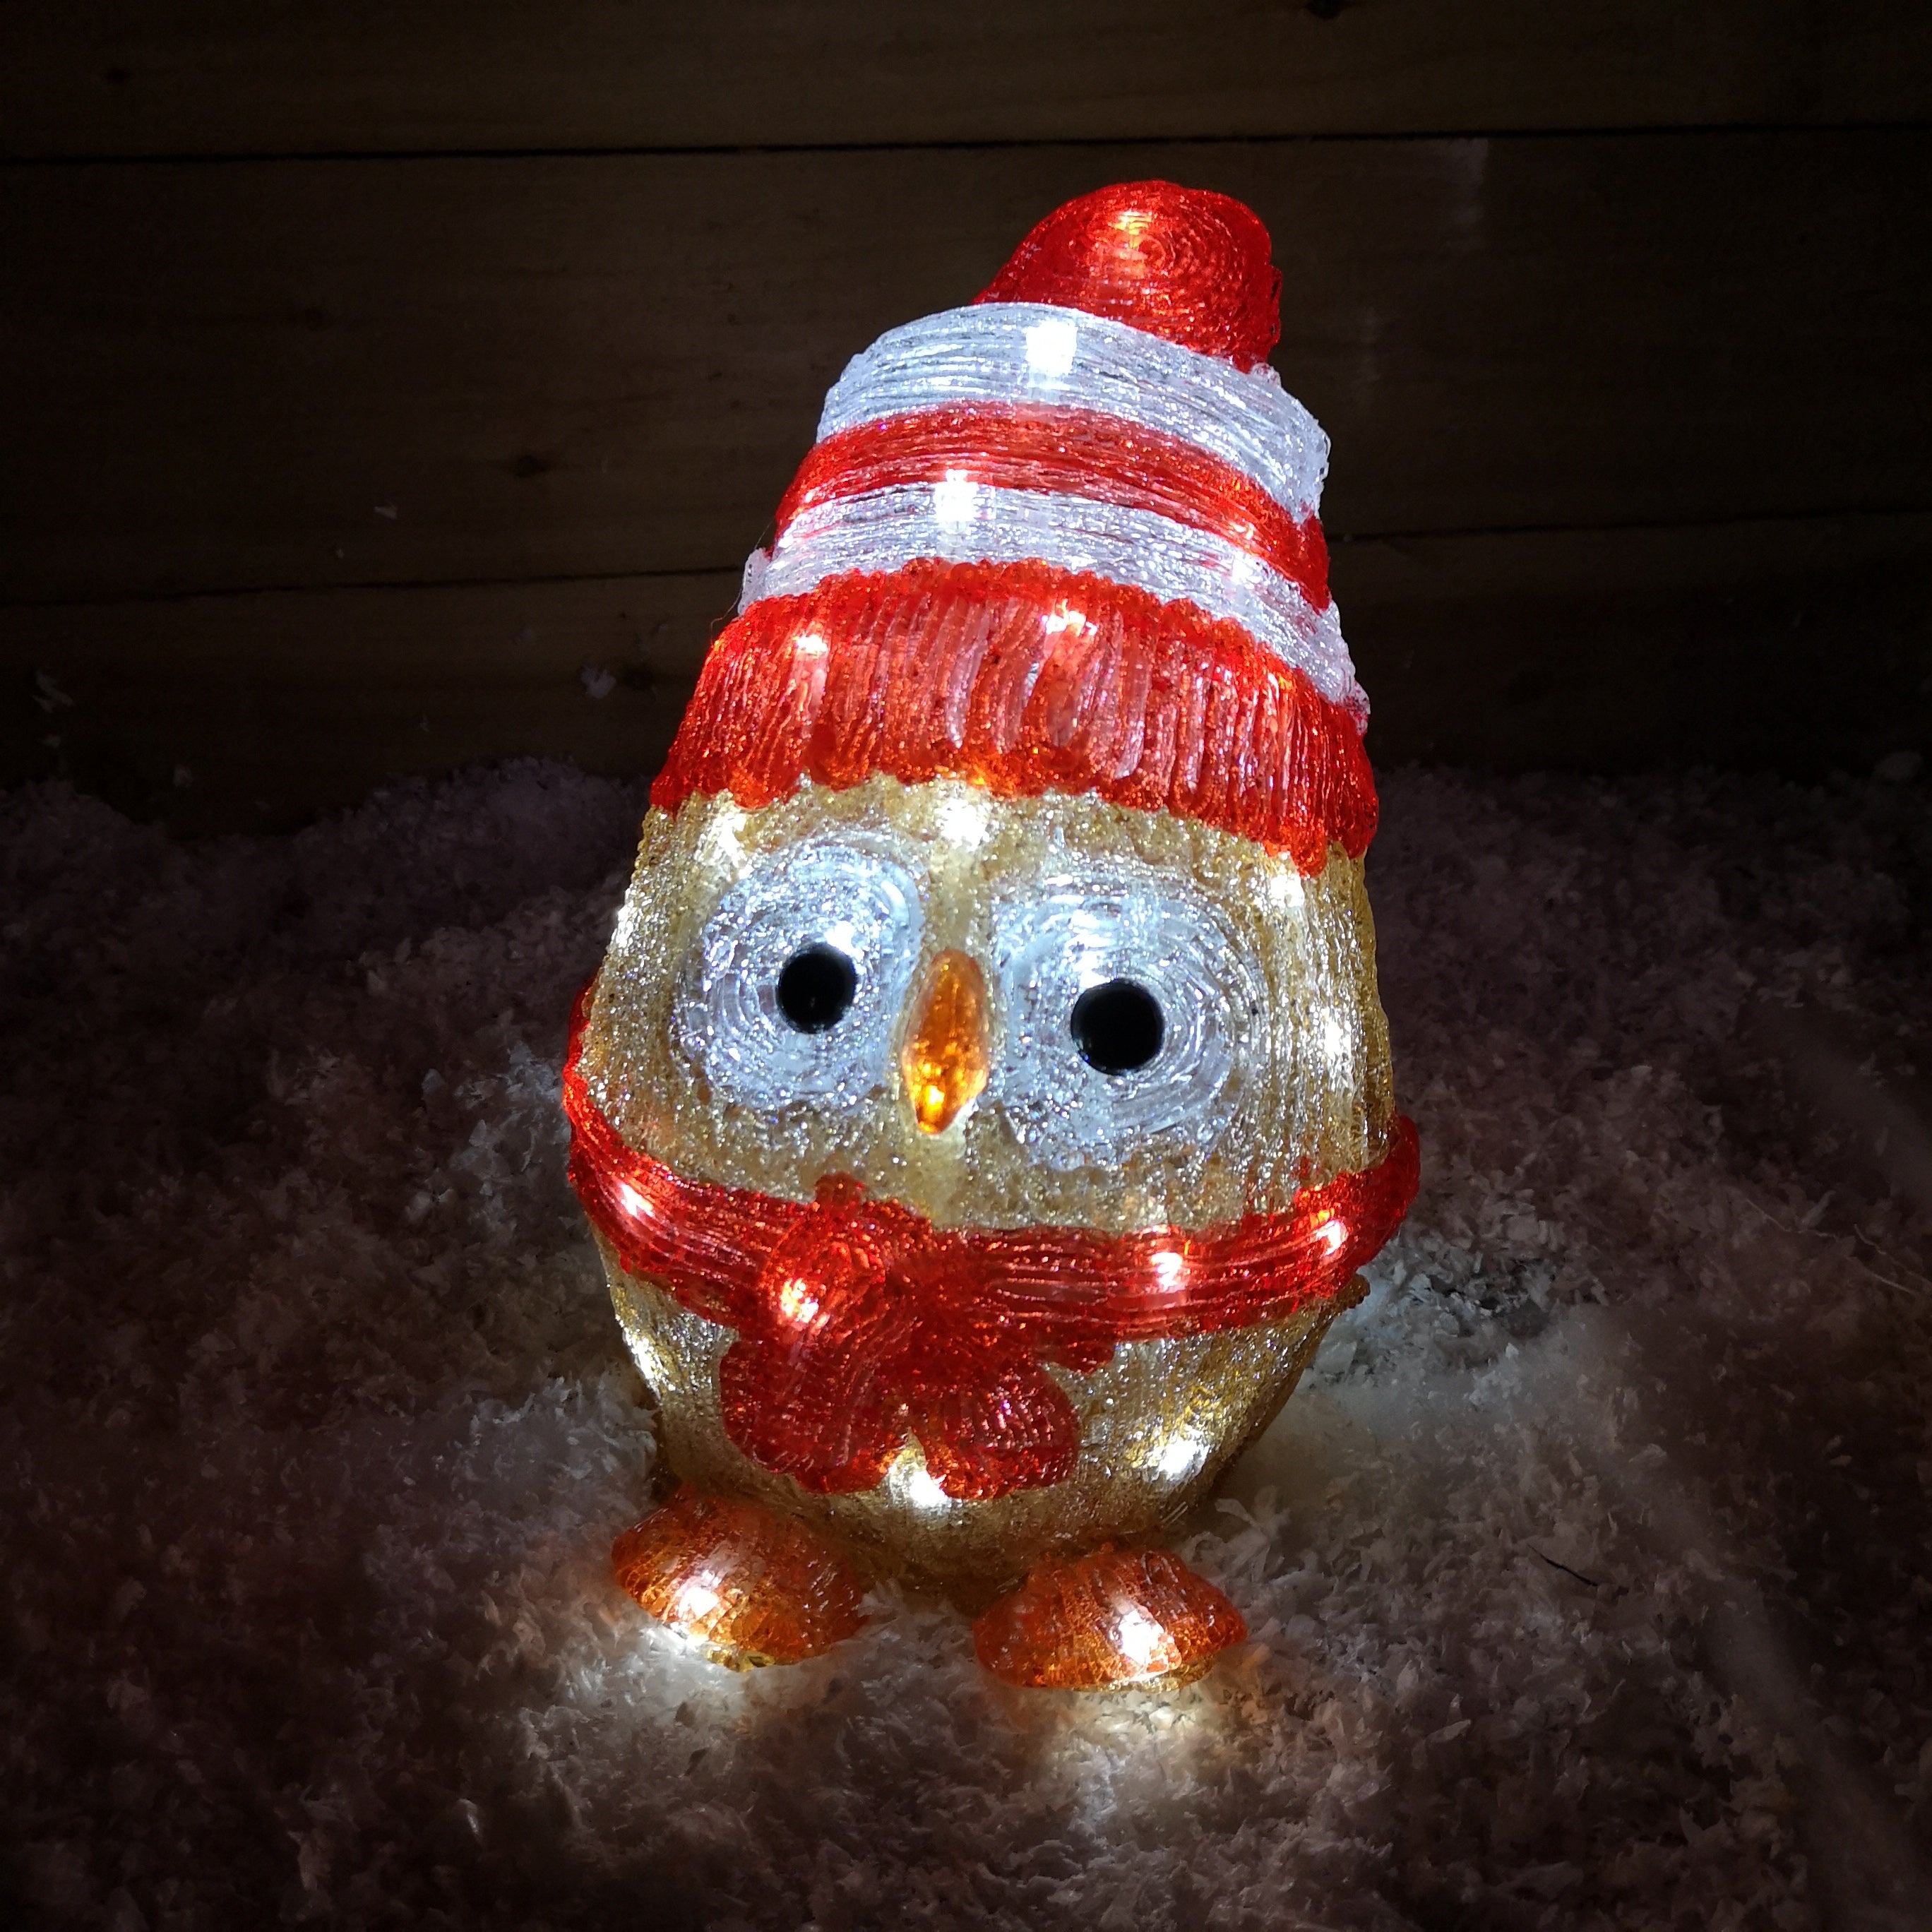 Christmas Acrylic Owl With Christmas Hat & Scarf 40 LED Lights & Timer Function